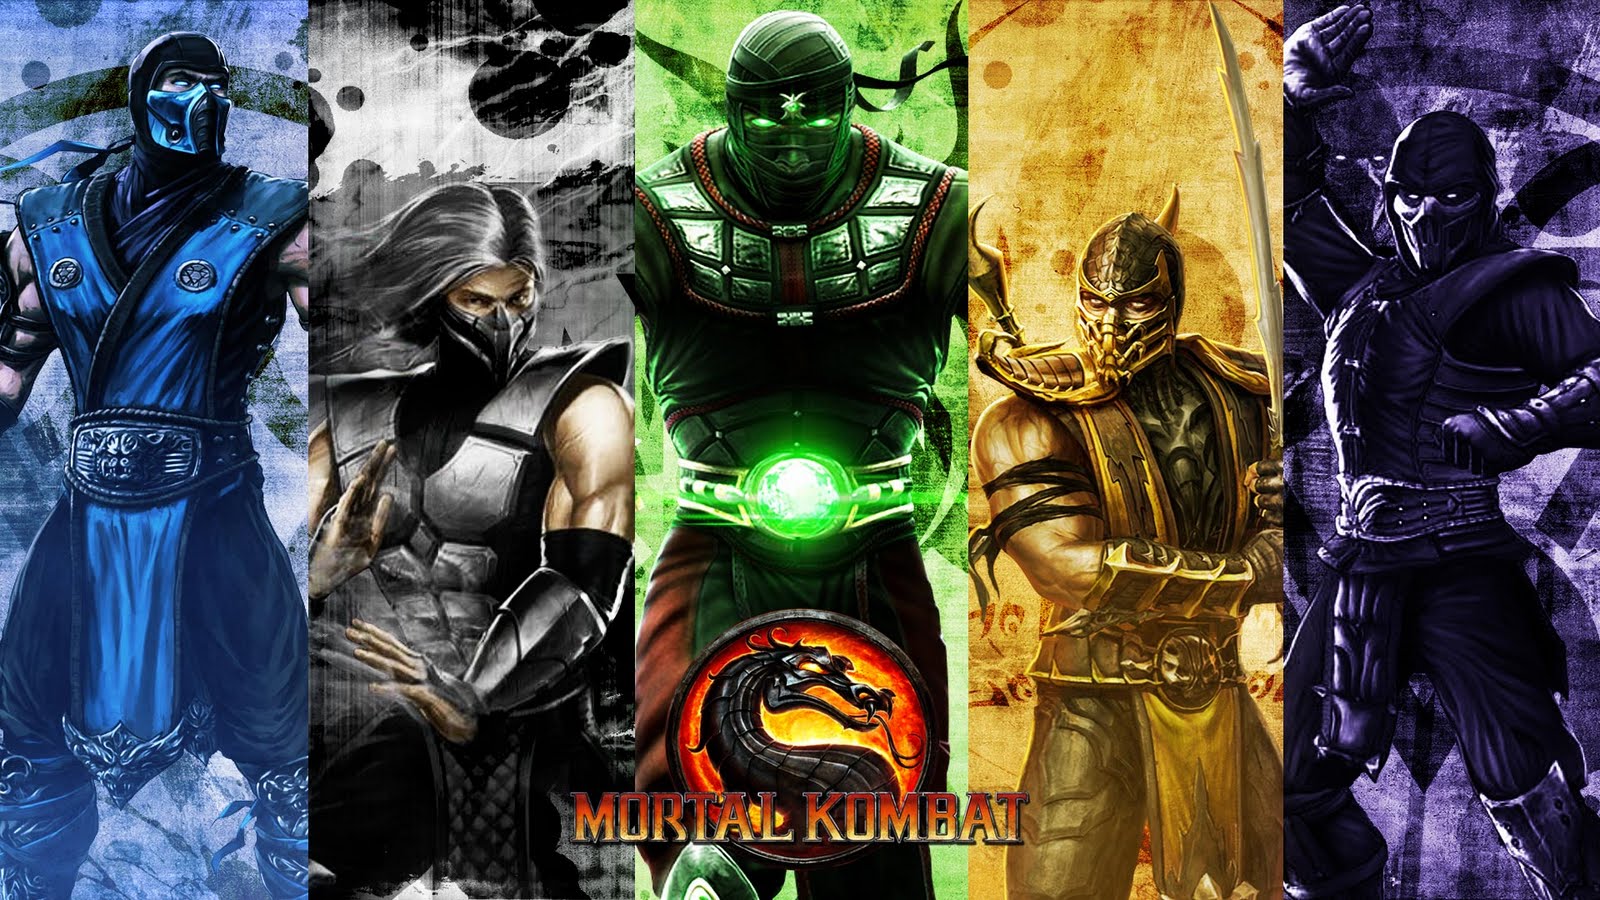 Mortal Kombat 9 Pics, Video Game Collection